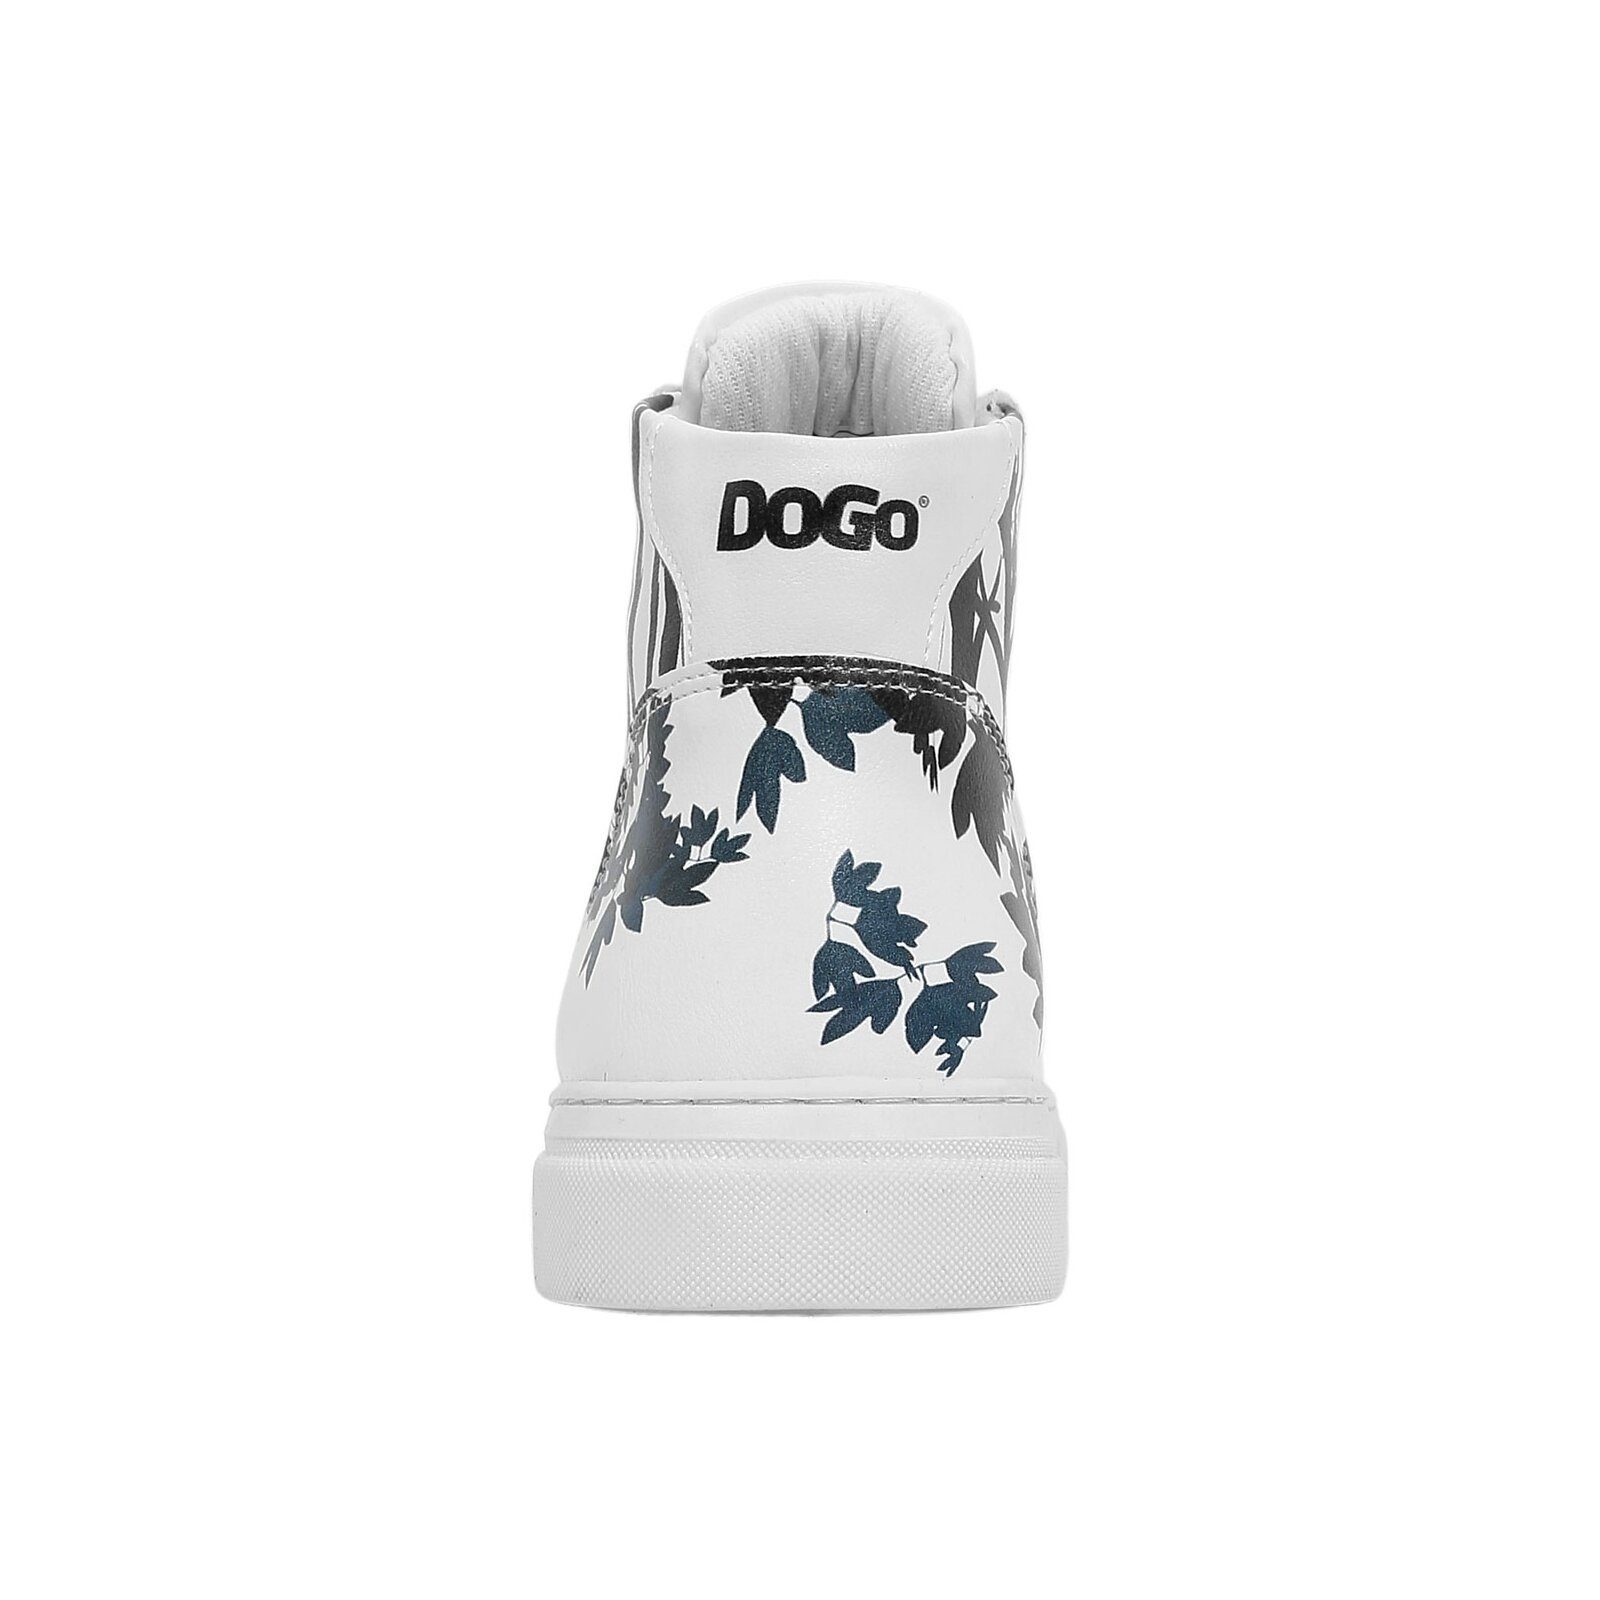 DOGO Ace Vegan Boots Orange Stiefelette